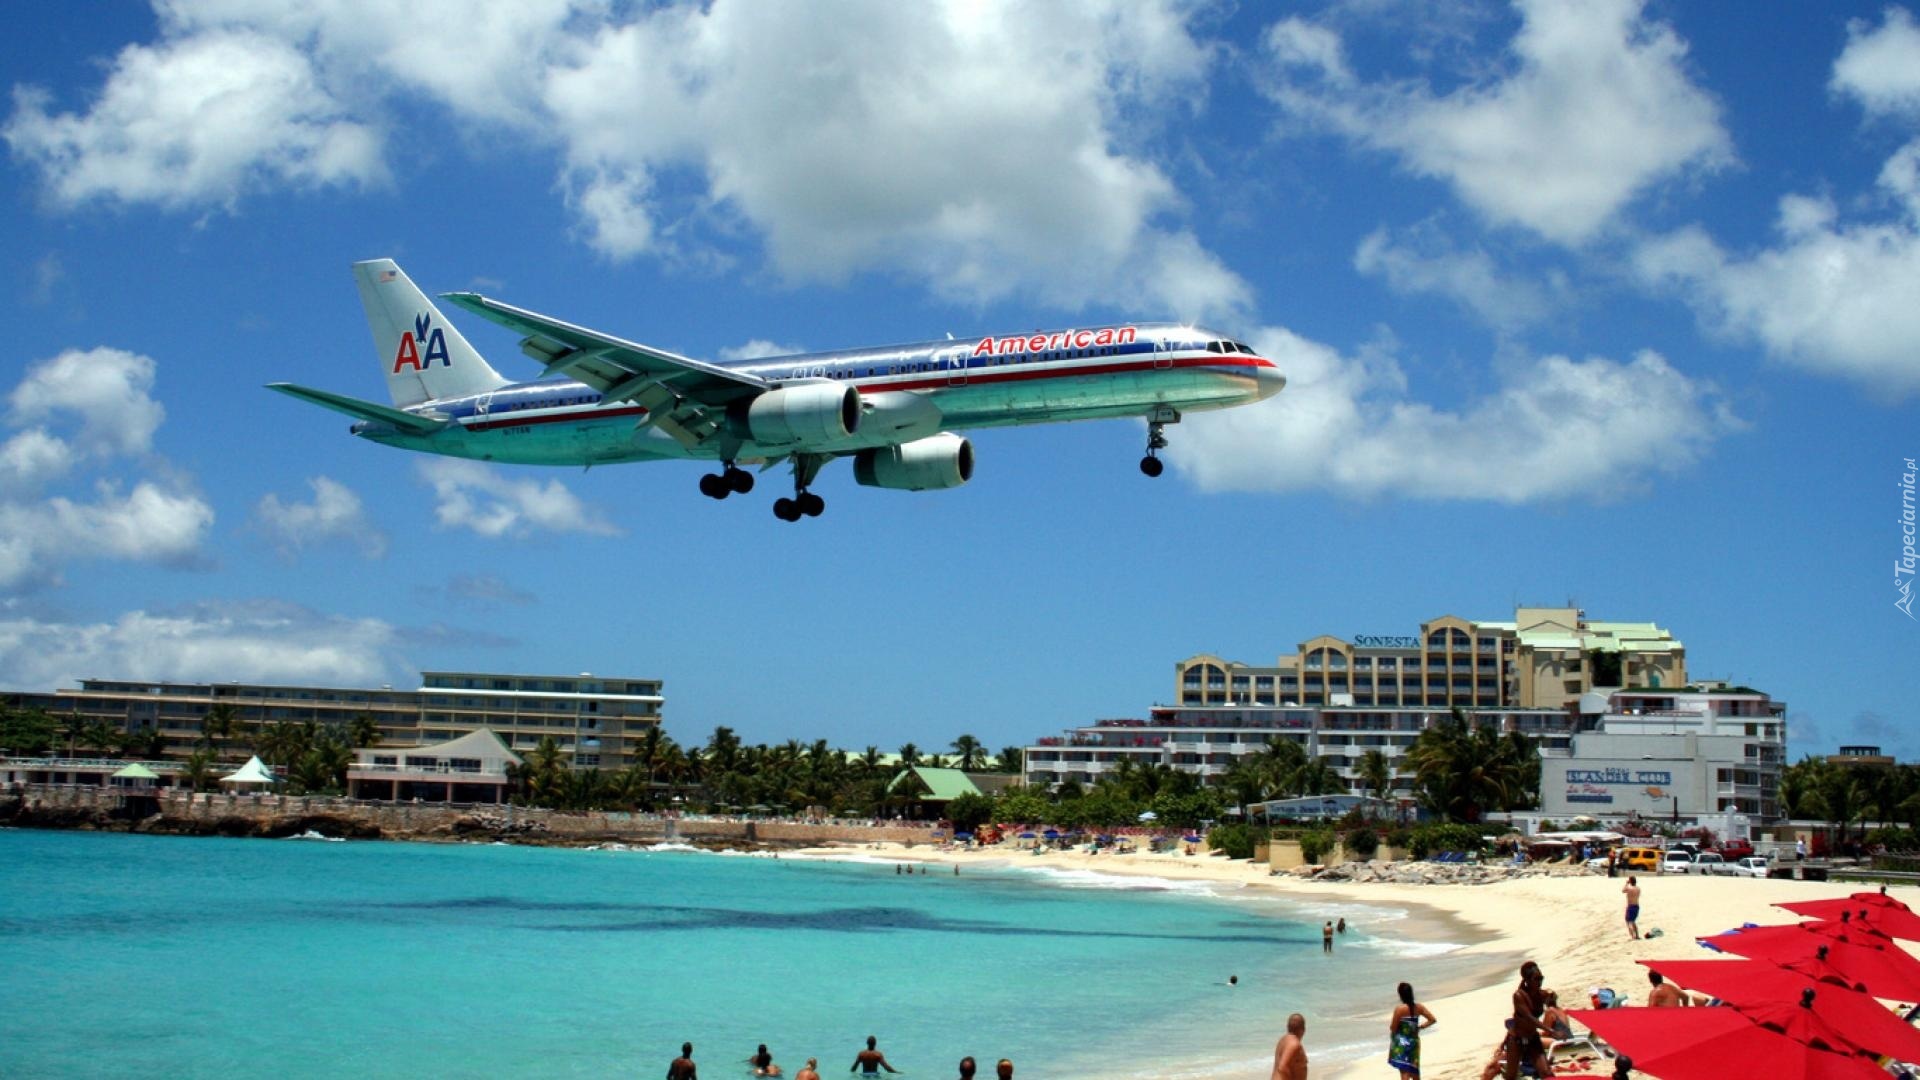 St Maarten, Lądujący, Samolot, Ludzie, Plaża, Morze, Hotel